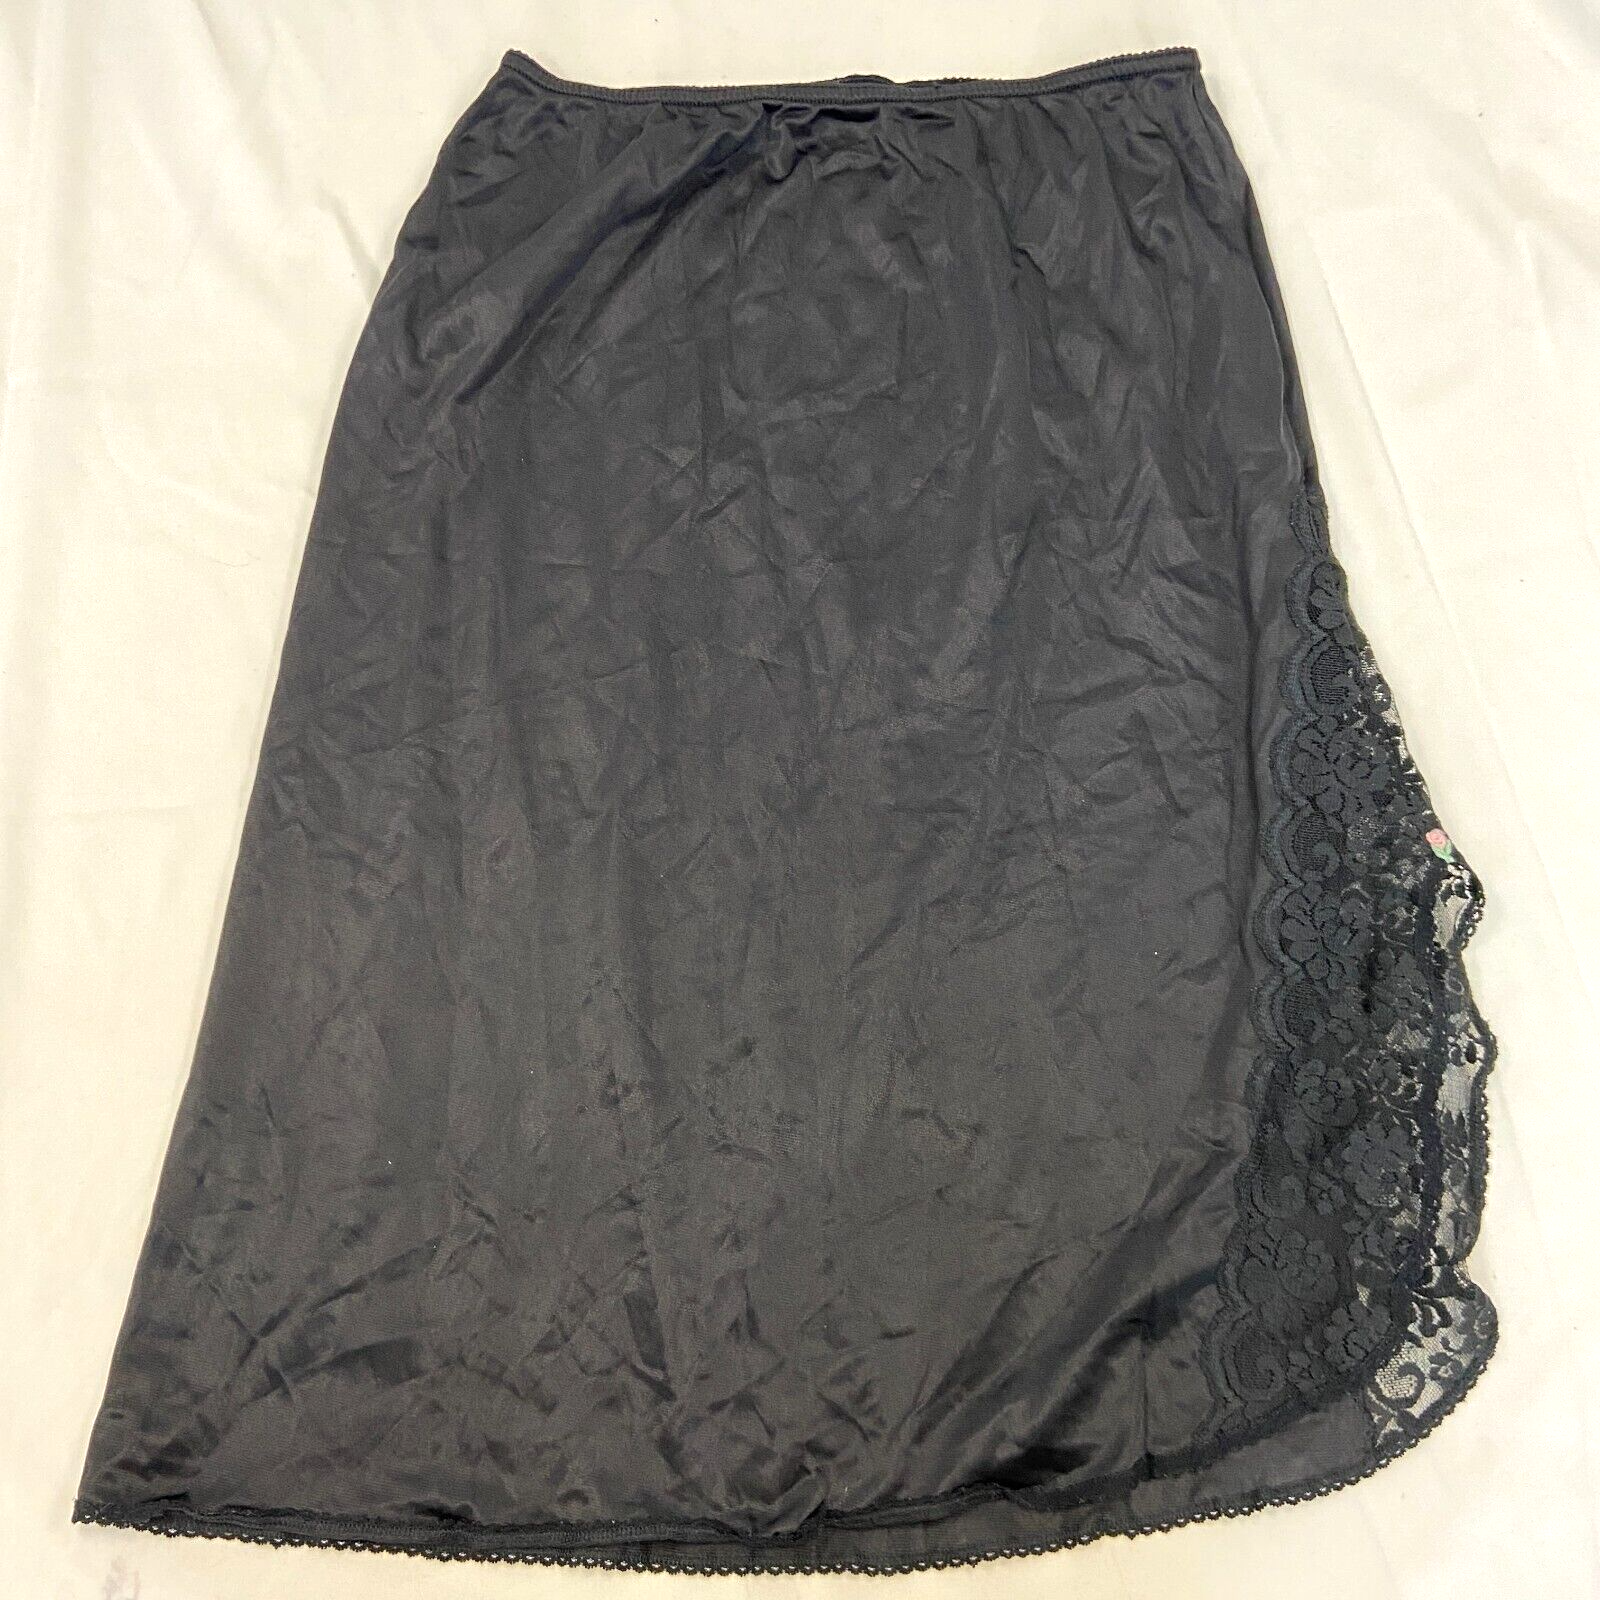 Vintage Black Nylon Half Slip Lace Trim Size Small